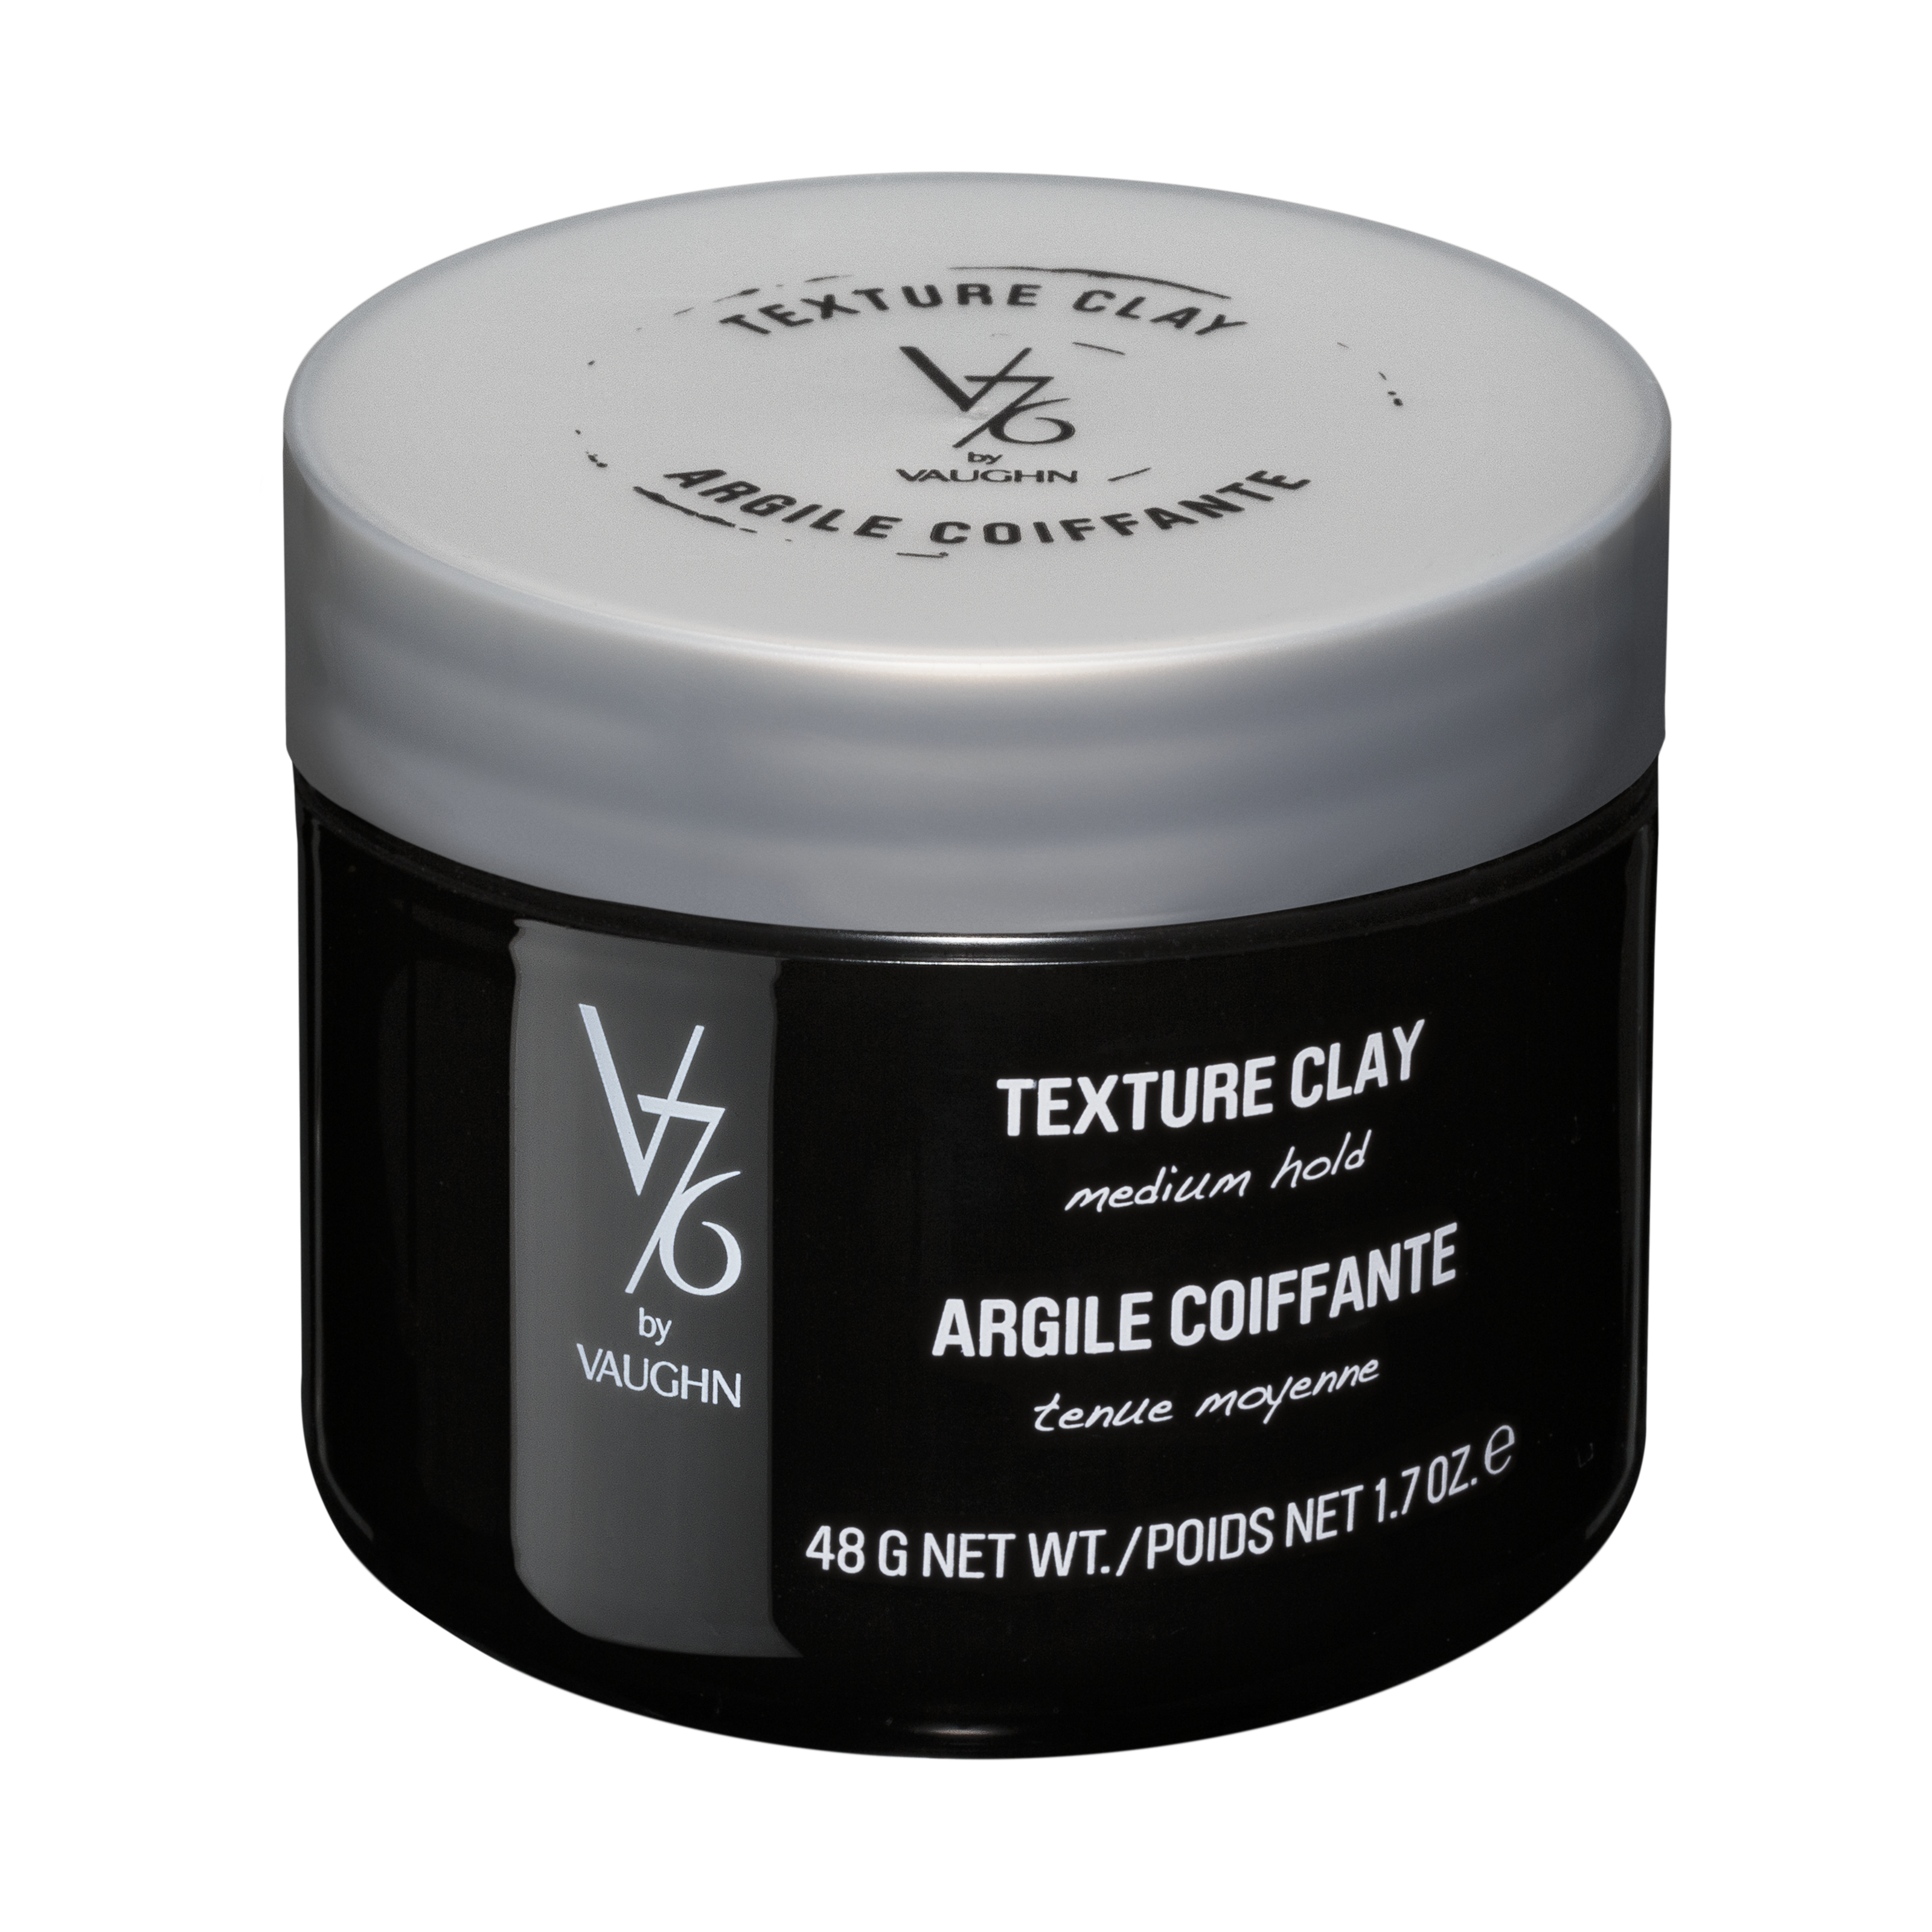 V76 by Vaughn Texture Clay 48g 48 ml